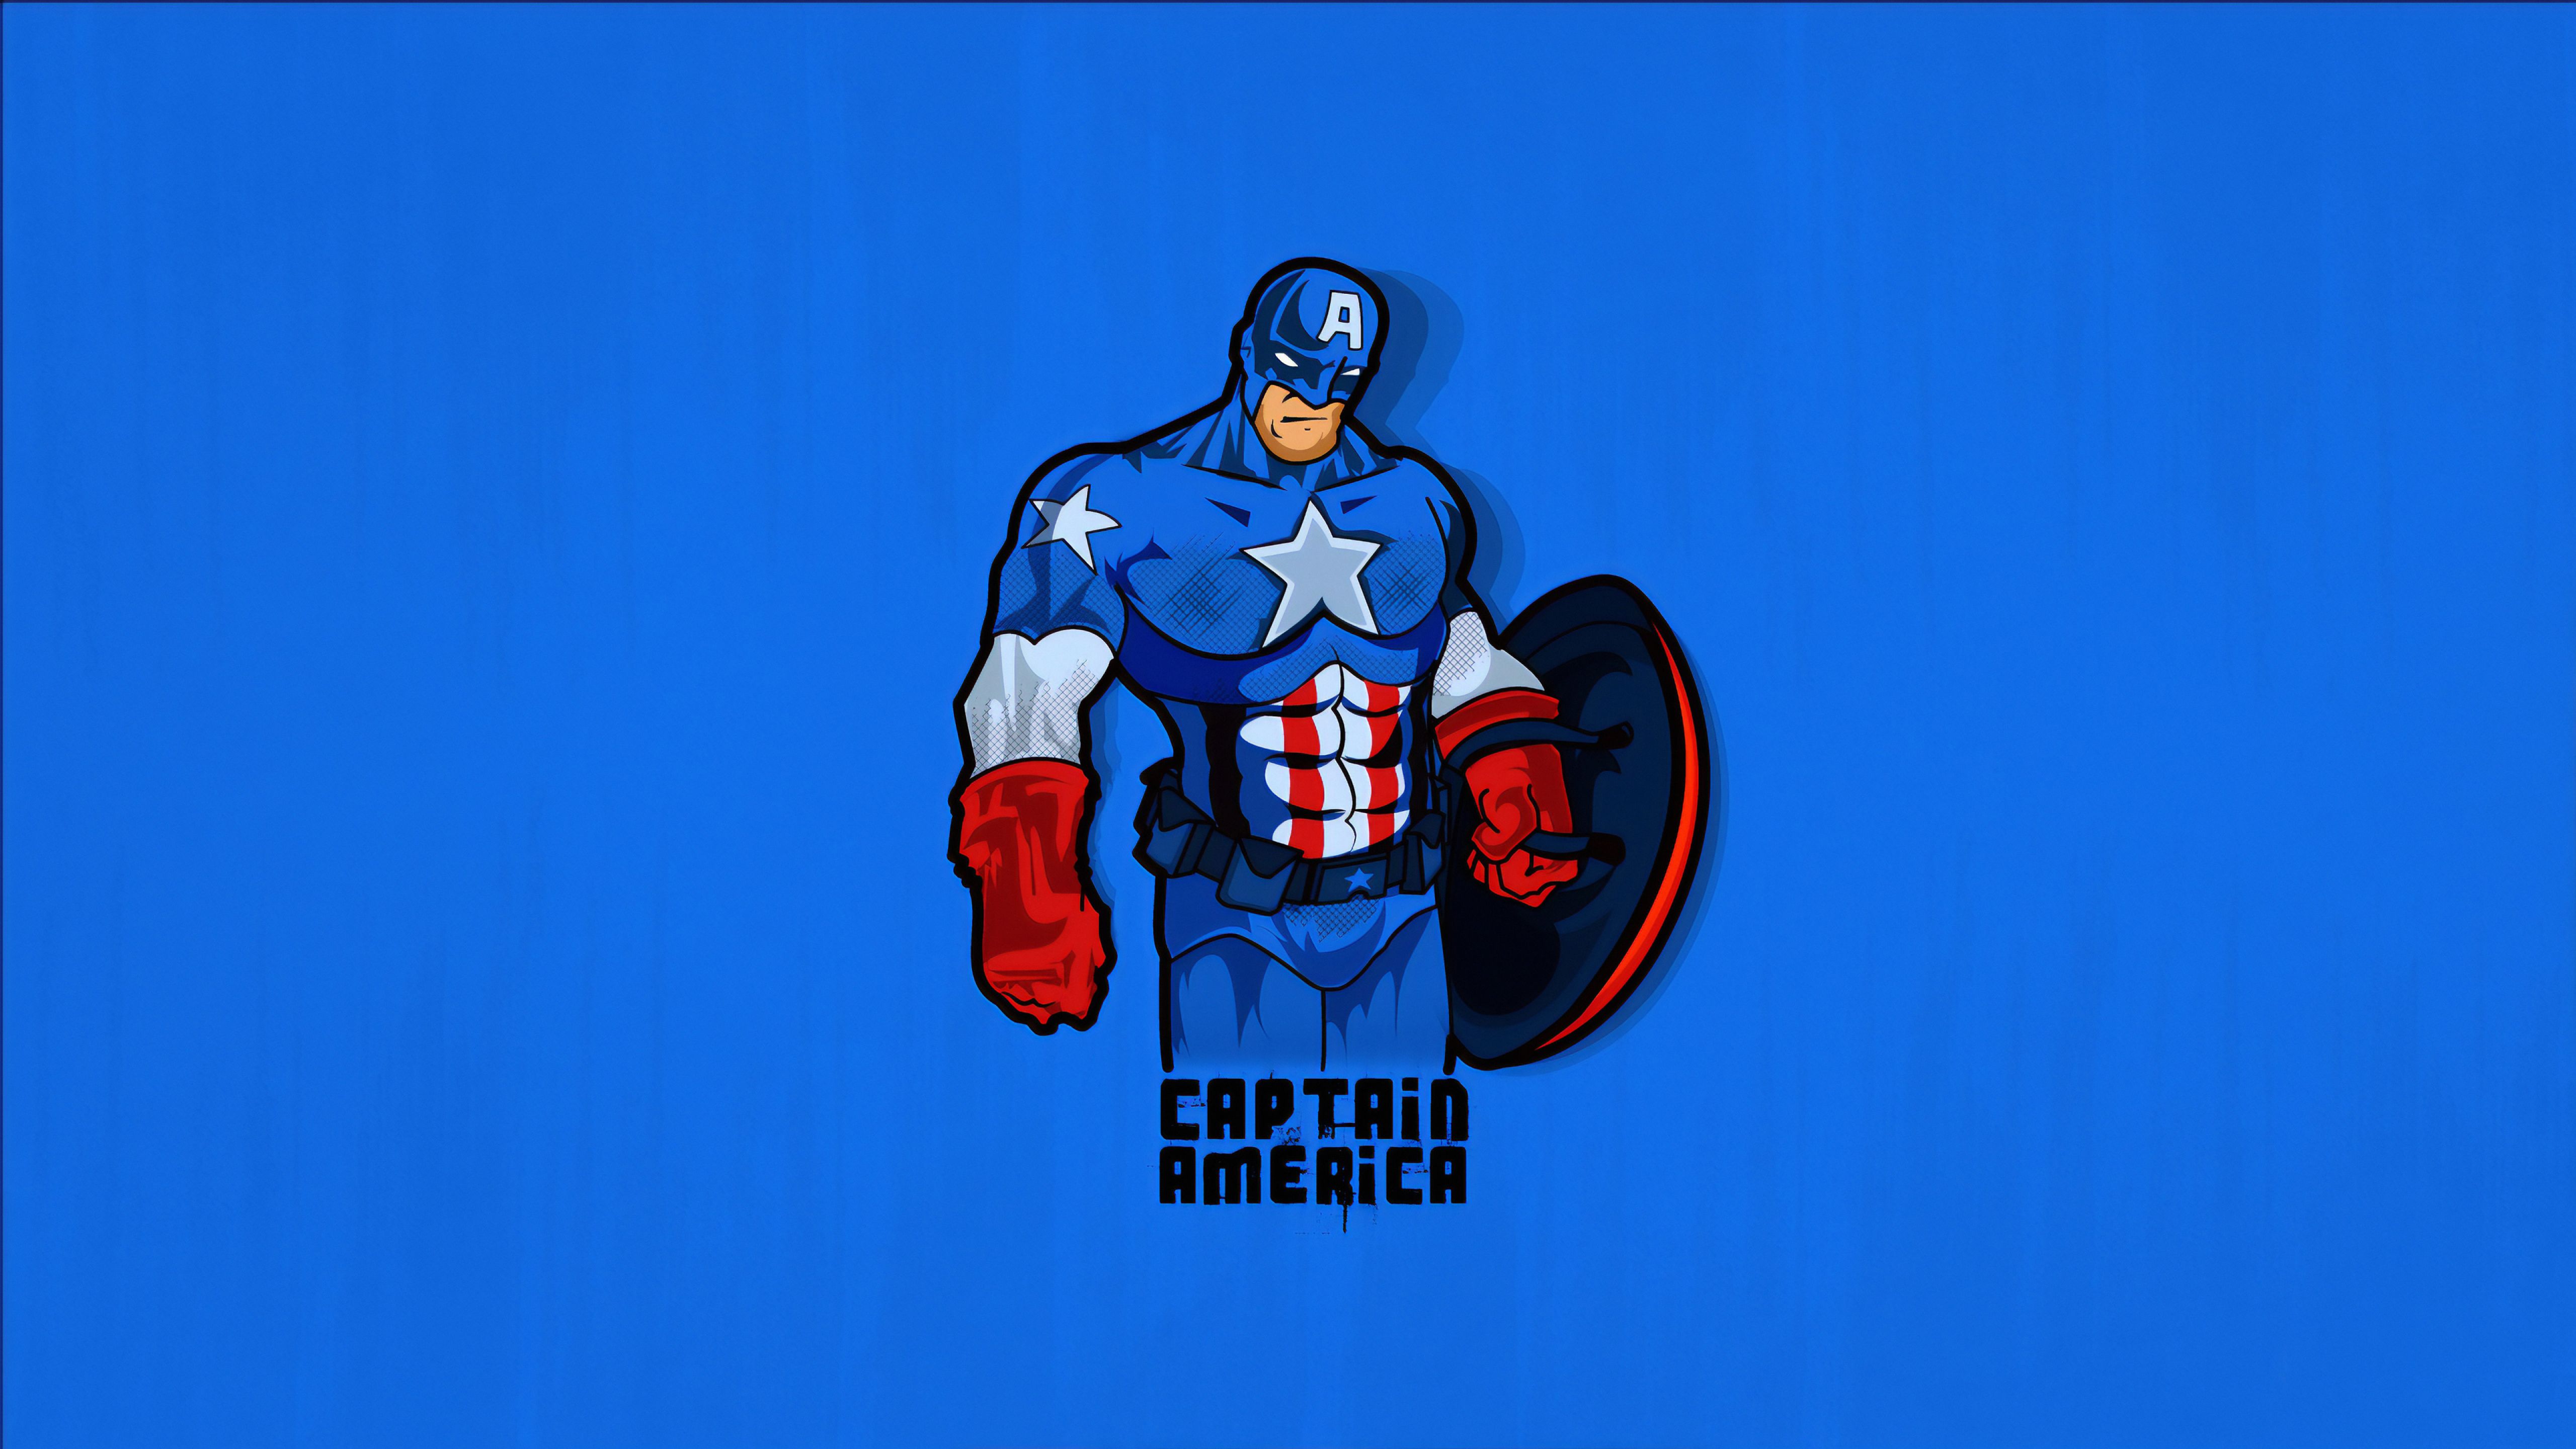 Minimalist Captain America 5K Wallpaper, HD Superheroes 4K Wallpaper, Image, Photo and Background